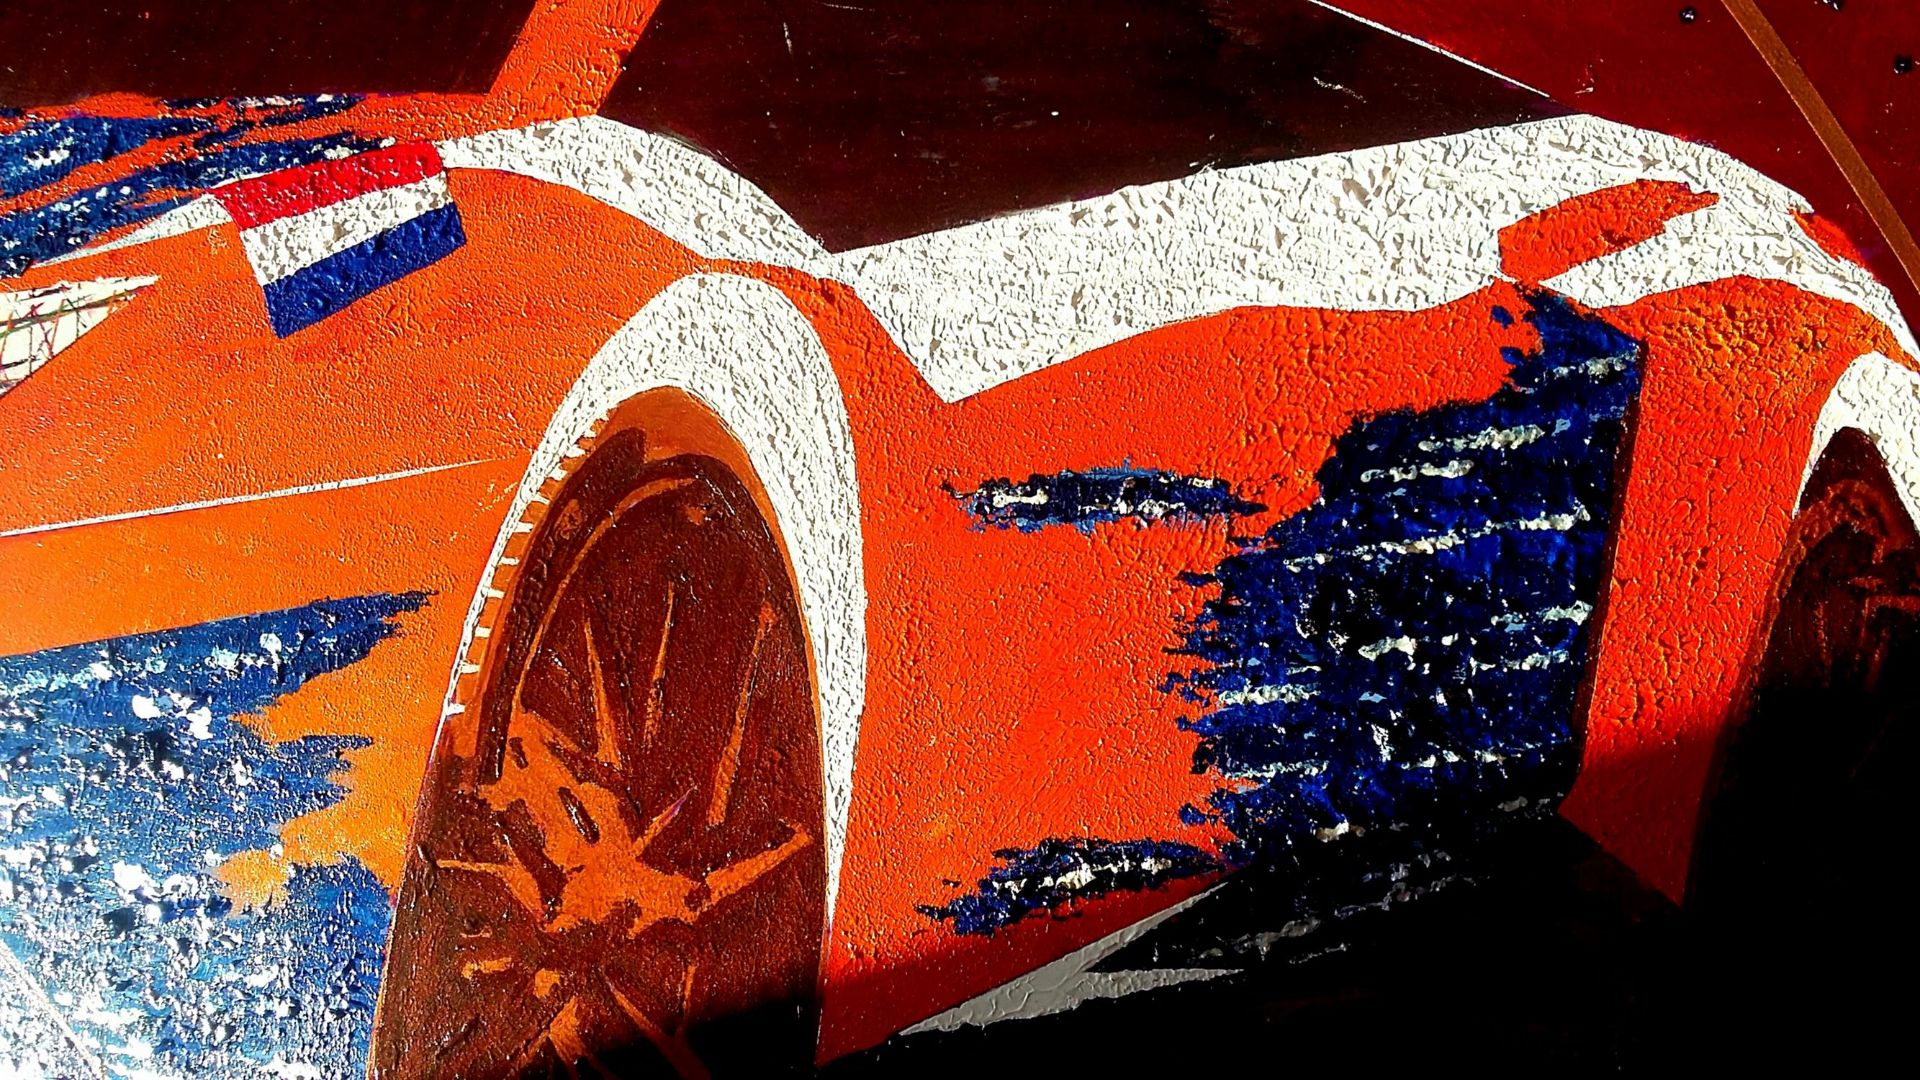 'Netherlands Celestial' Lamborghini Original Artwork - Image 2 of 5